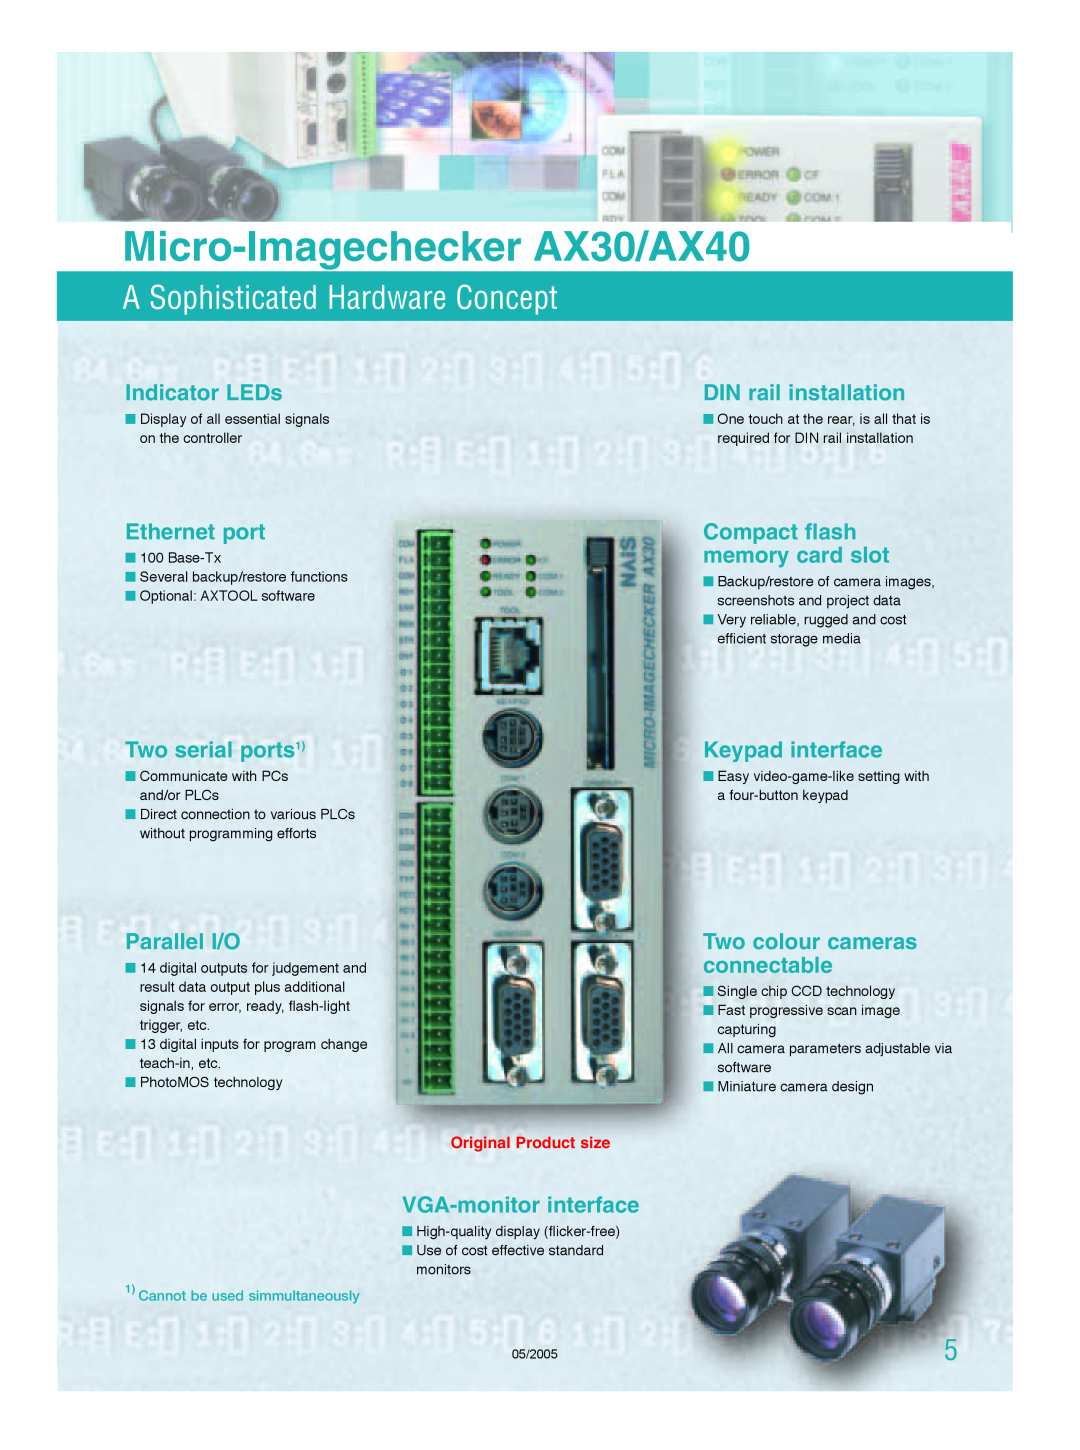 Panasonic A Sophisticated Hardware Concept, Micro-Imagechecker AX30/AX40, Indicator LEDs, Ethernet port, Parallel I/O 